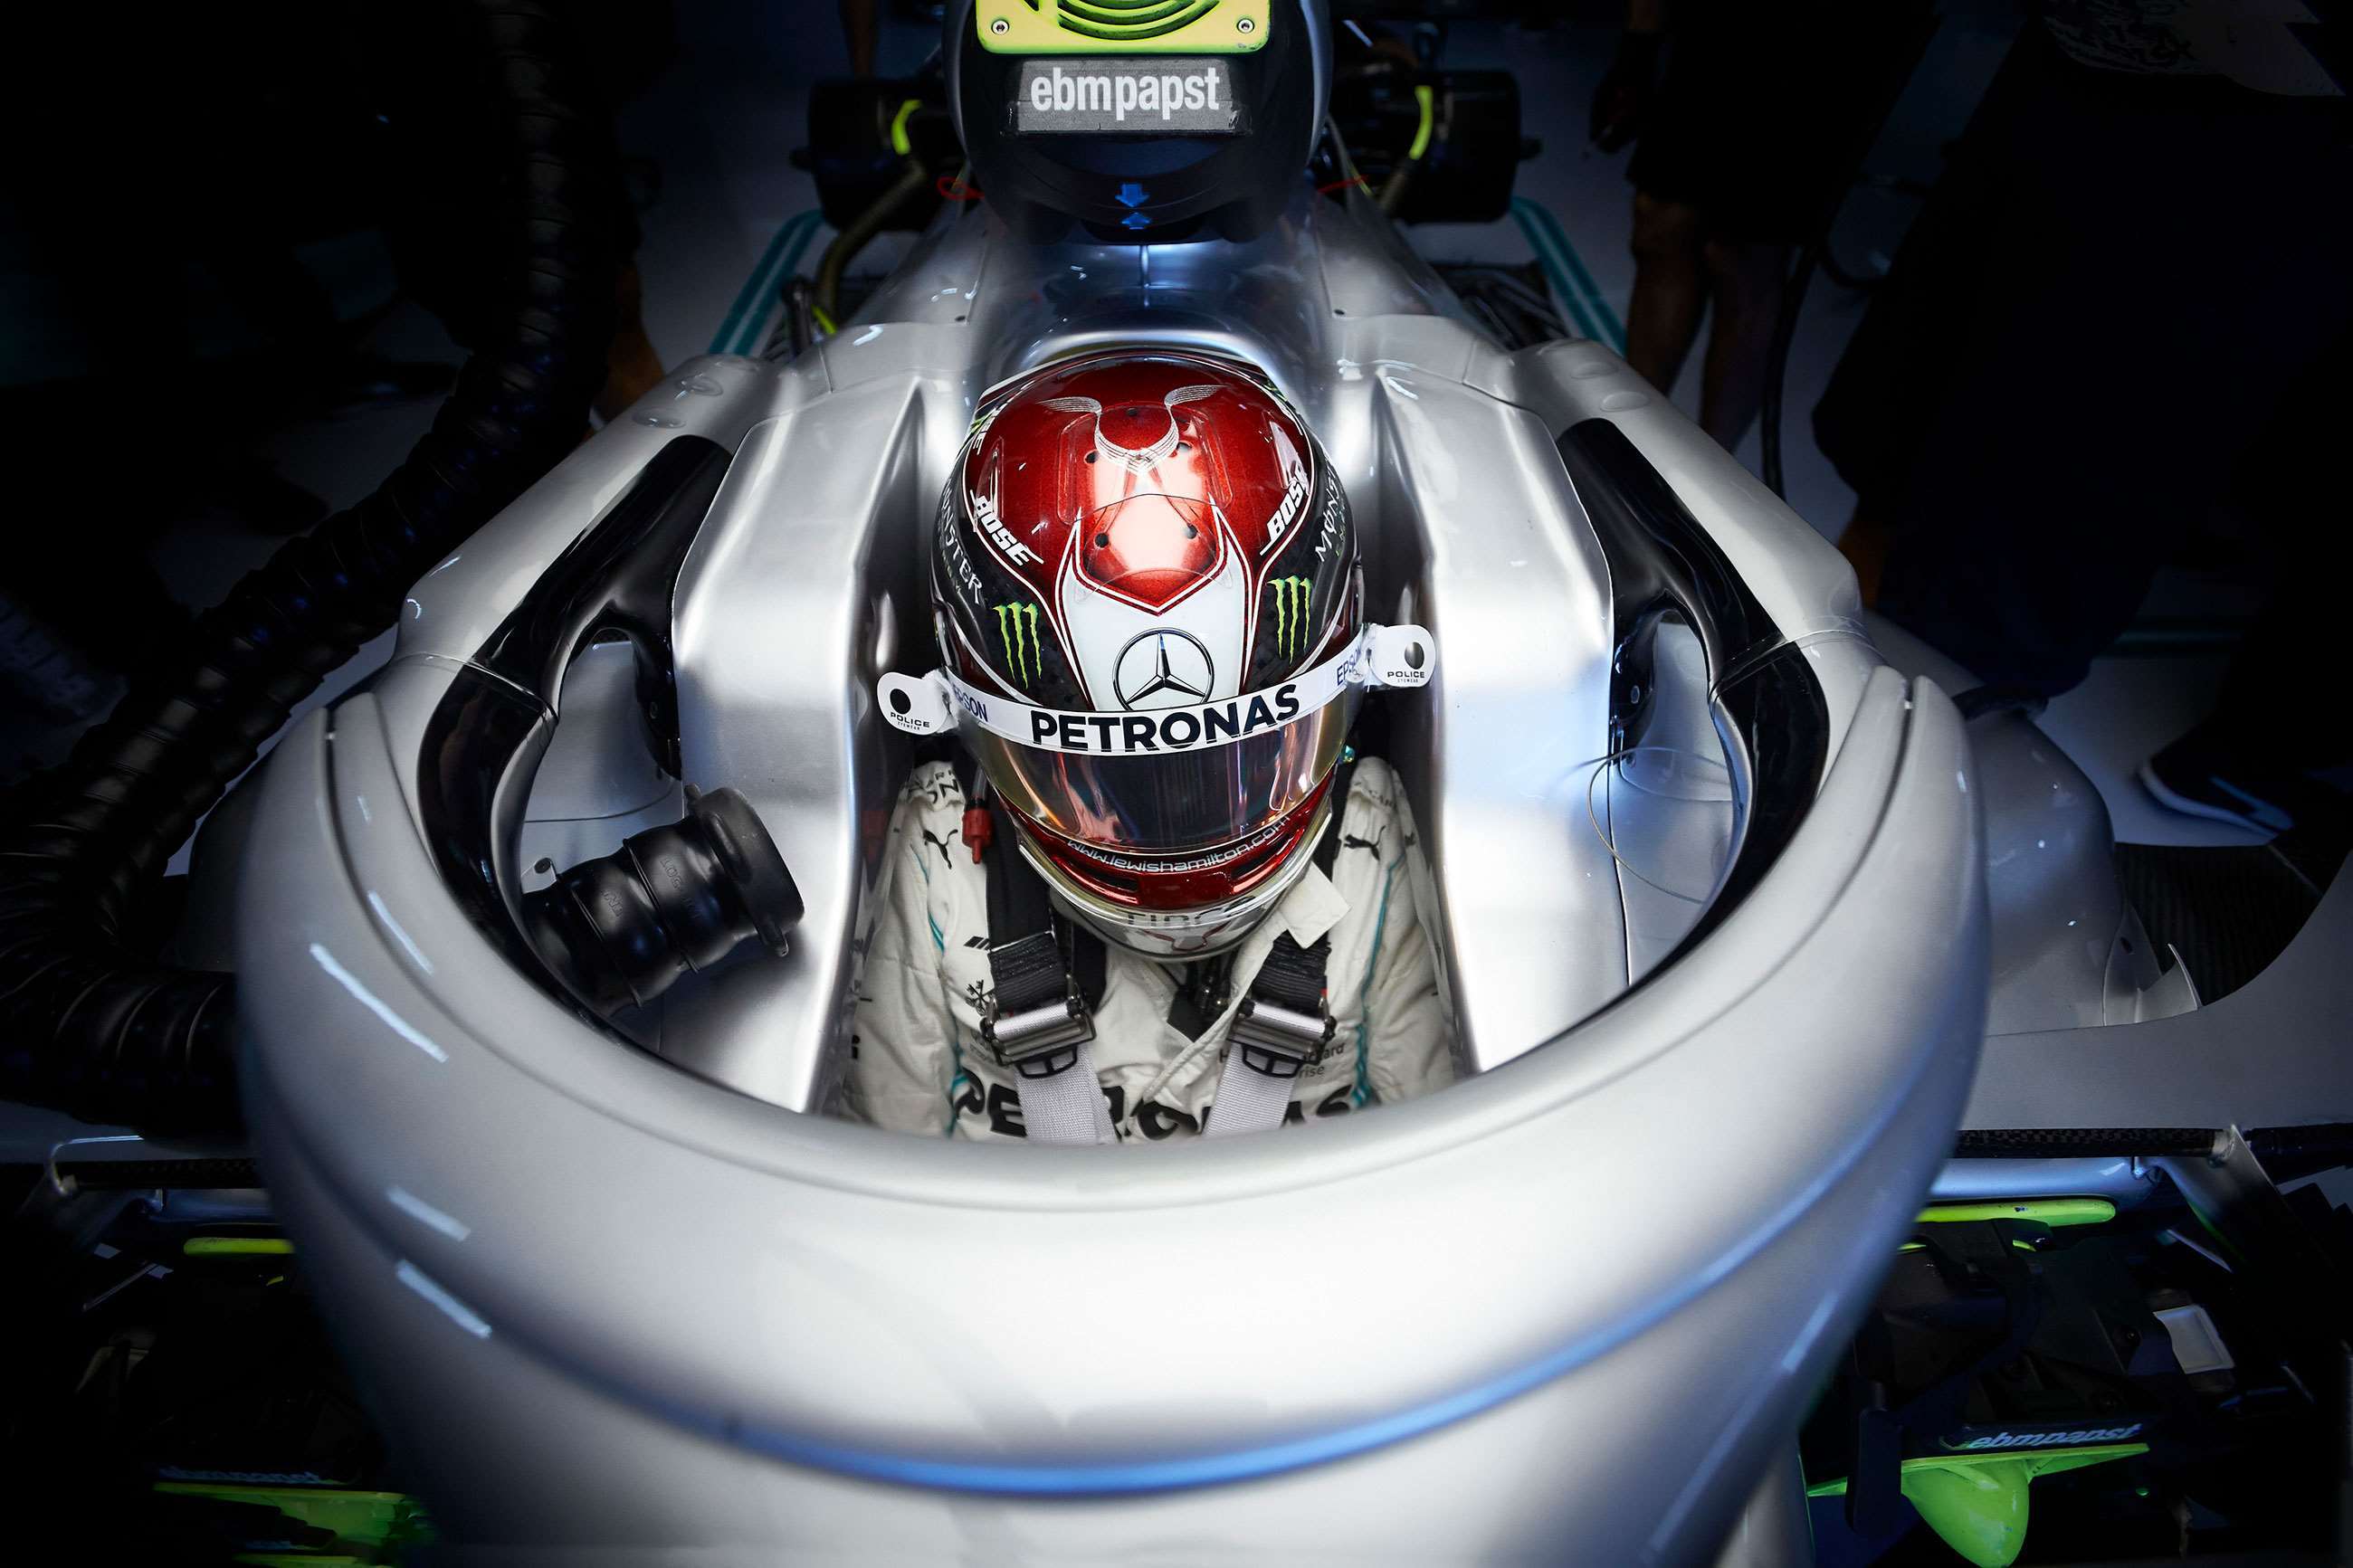 where-to-watch-formula-1-in-2020-lewis-hamilton-helmet-france-2019-steve-stherington-motorsport-images-goodwood-23012020.jpg